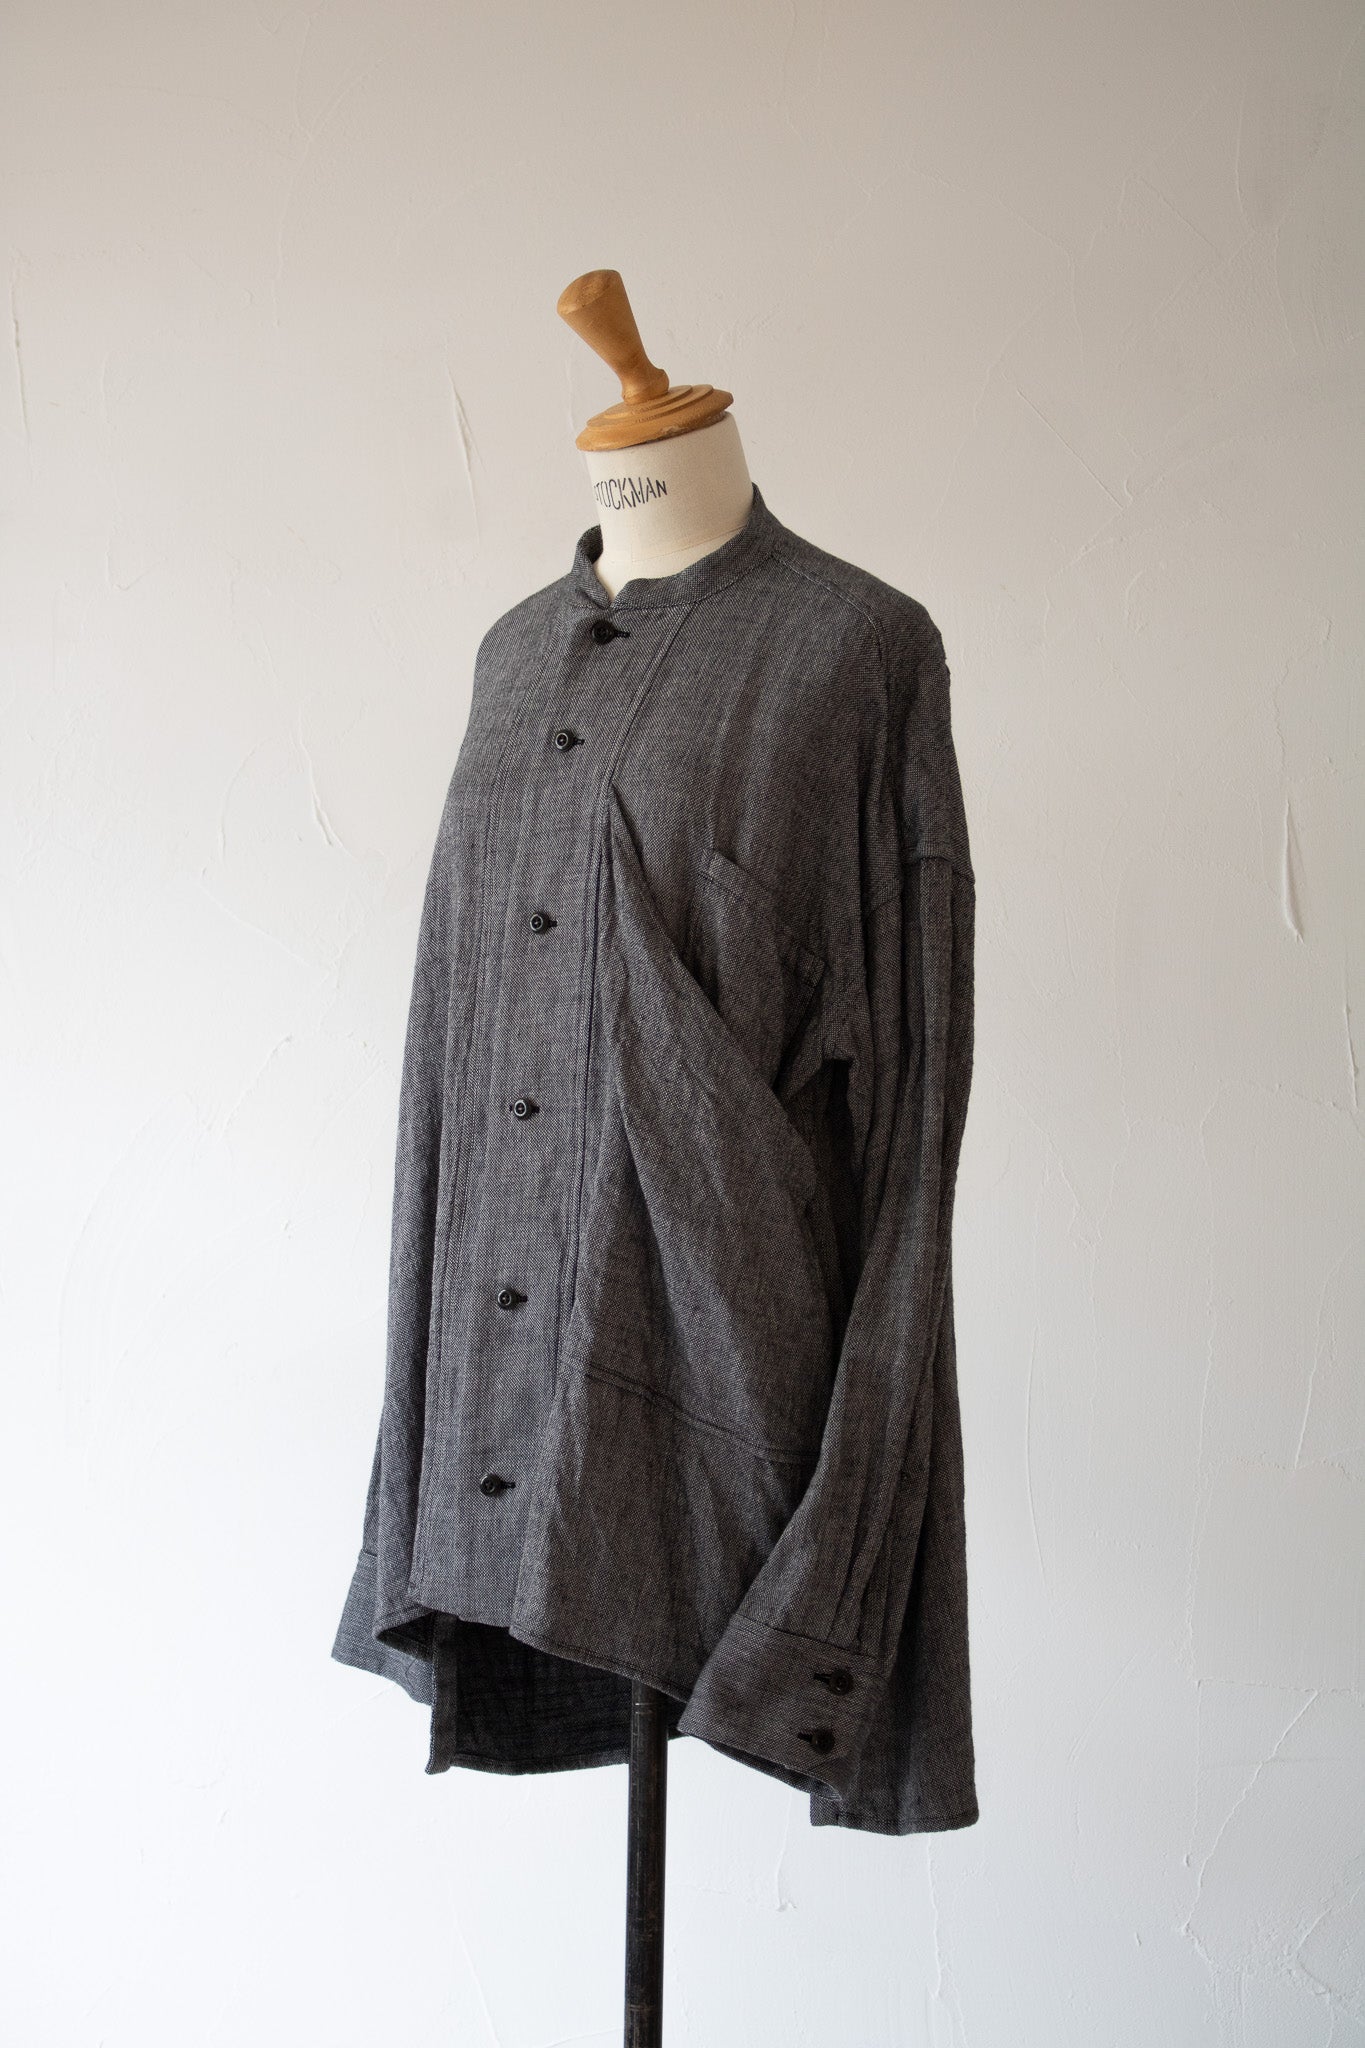 lama shirt K505 cotton twill gray/black